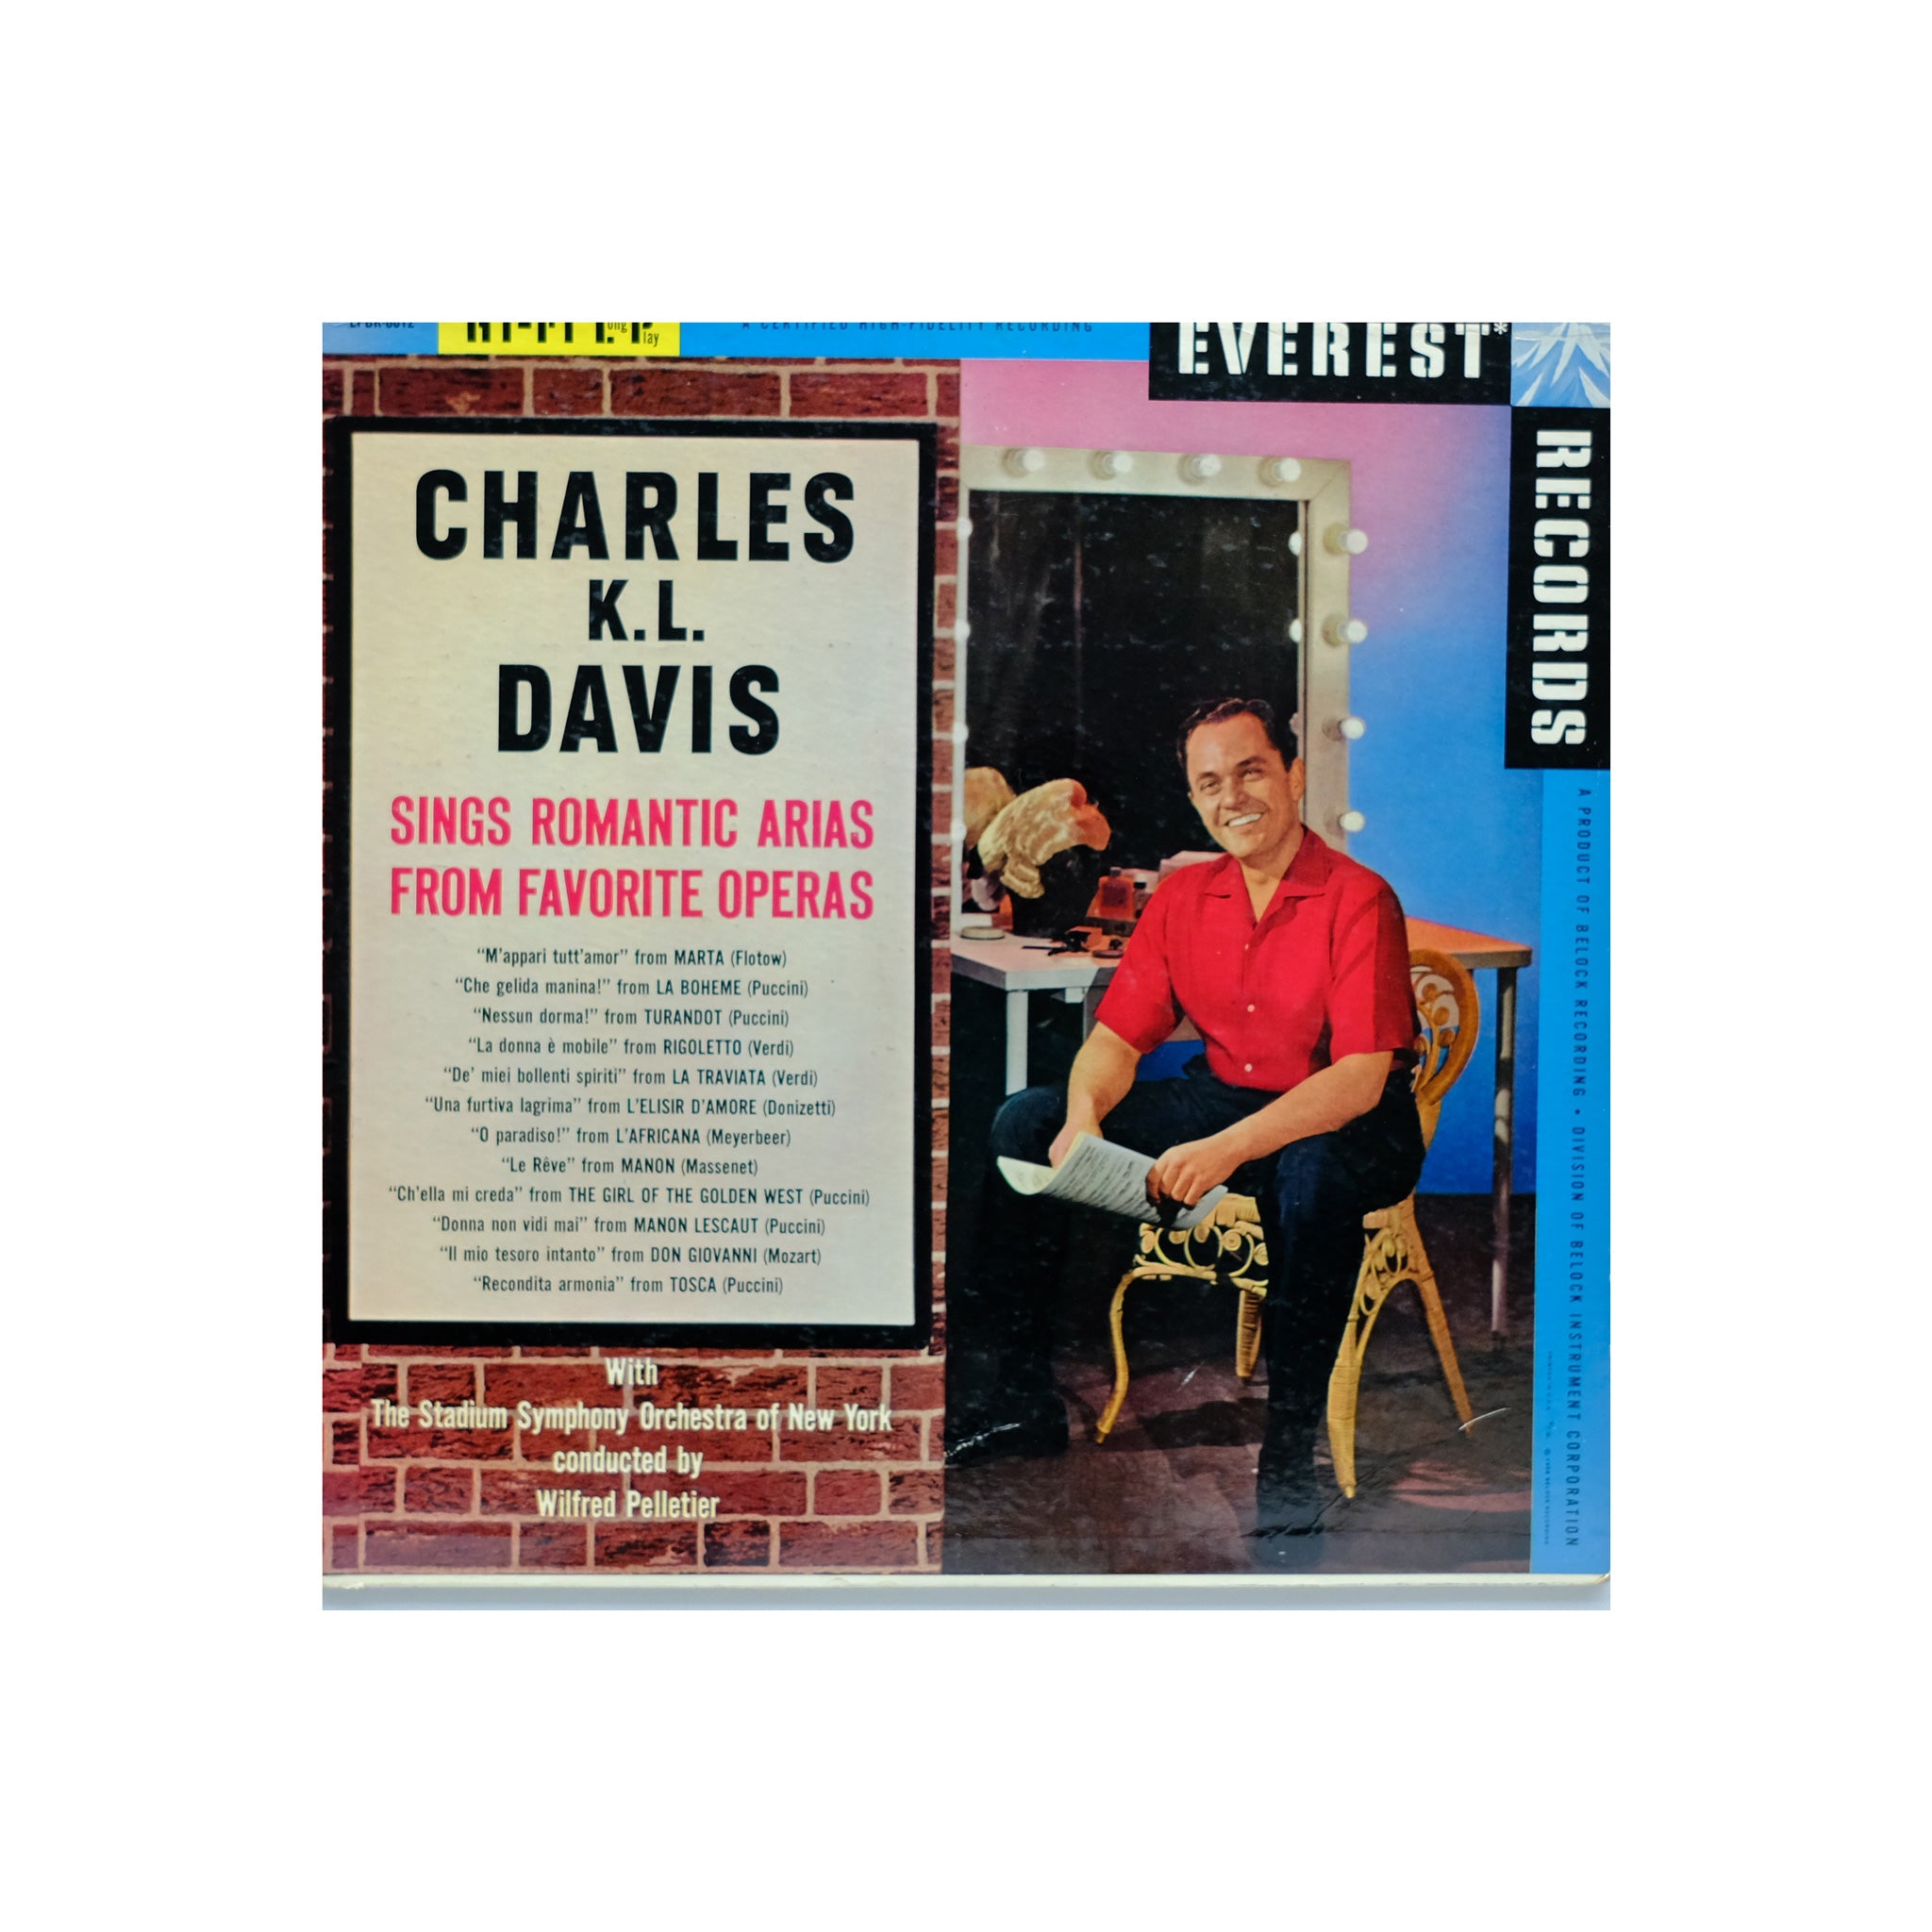 Charles K.L. Davis - Sings Romantic Arias from Favorite Operas